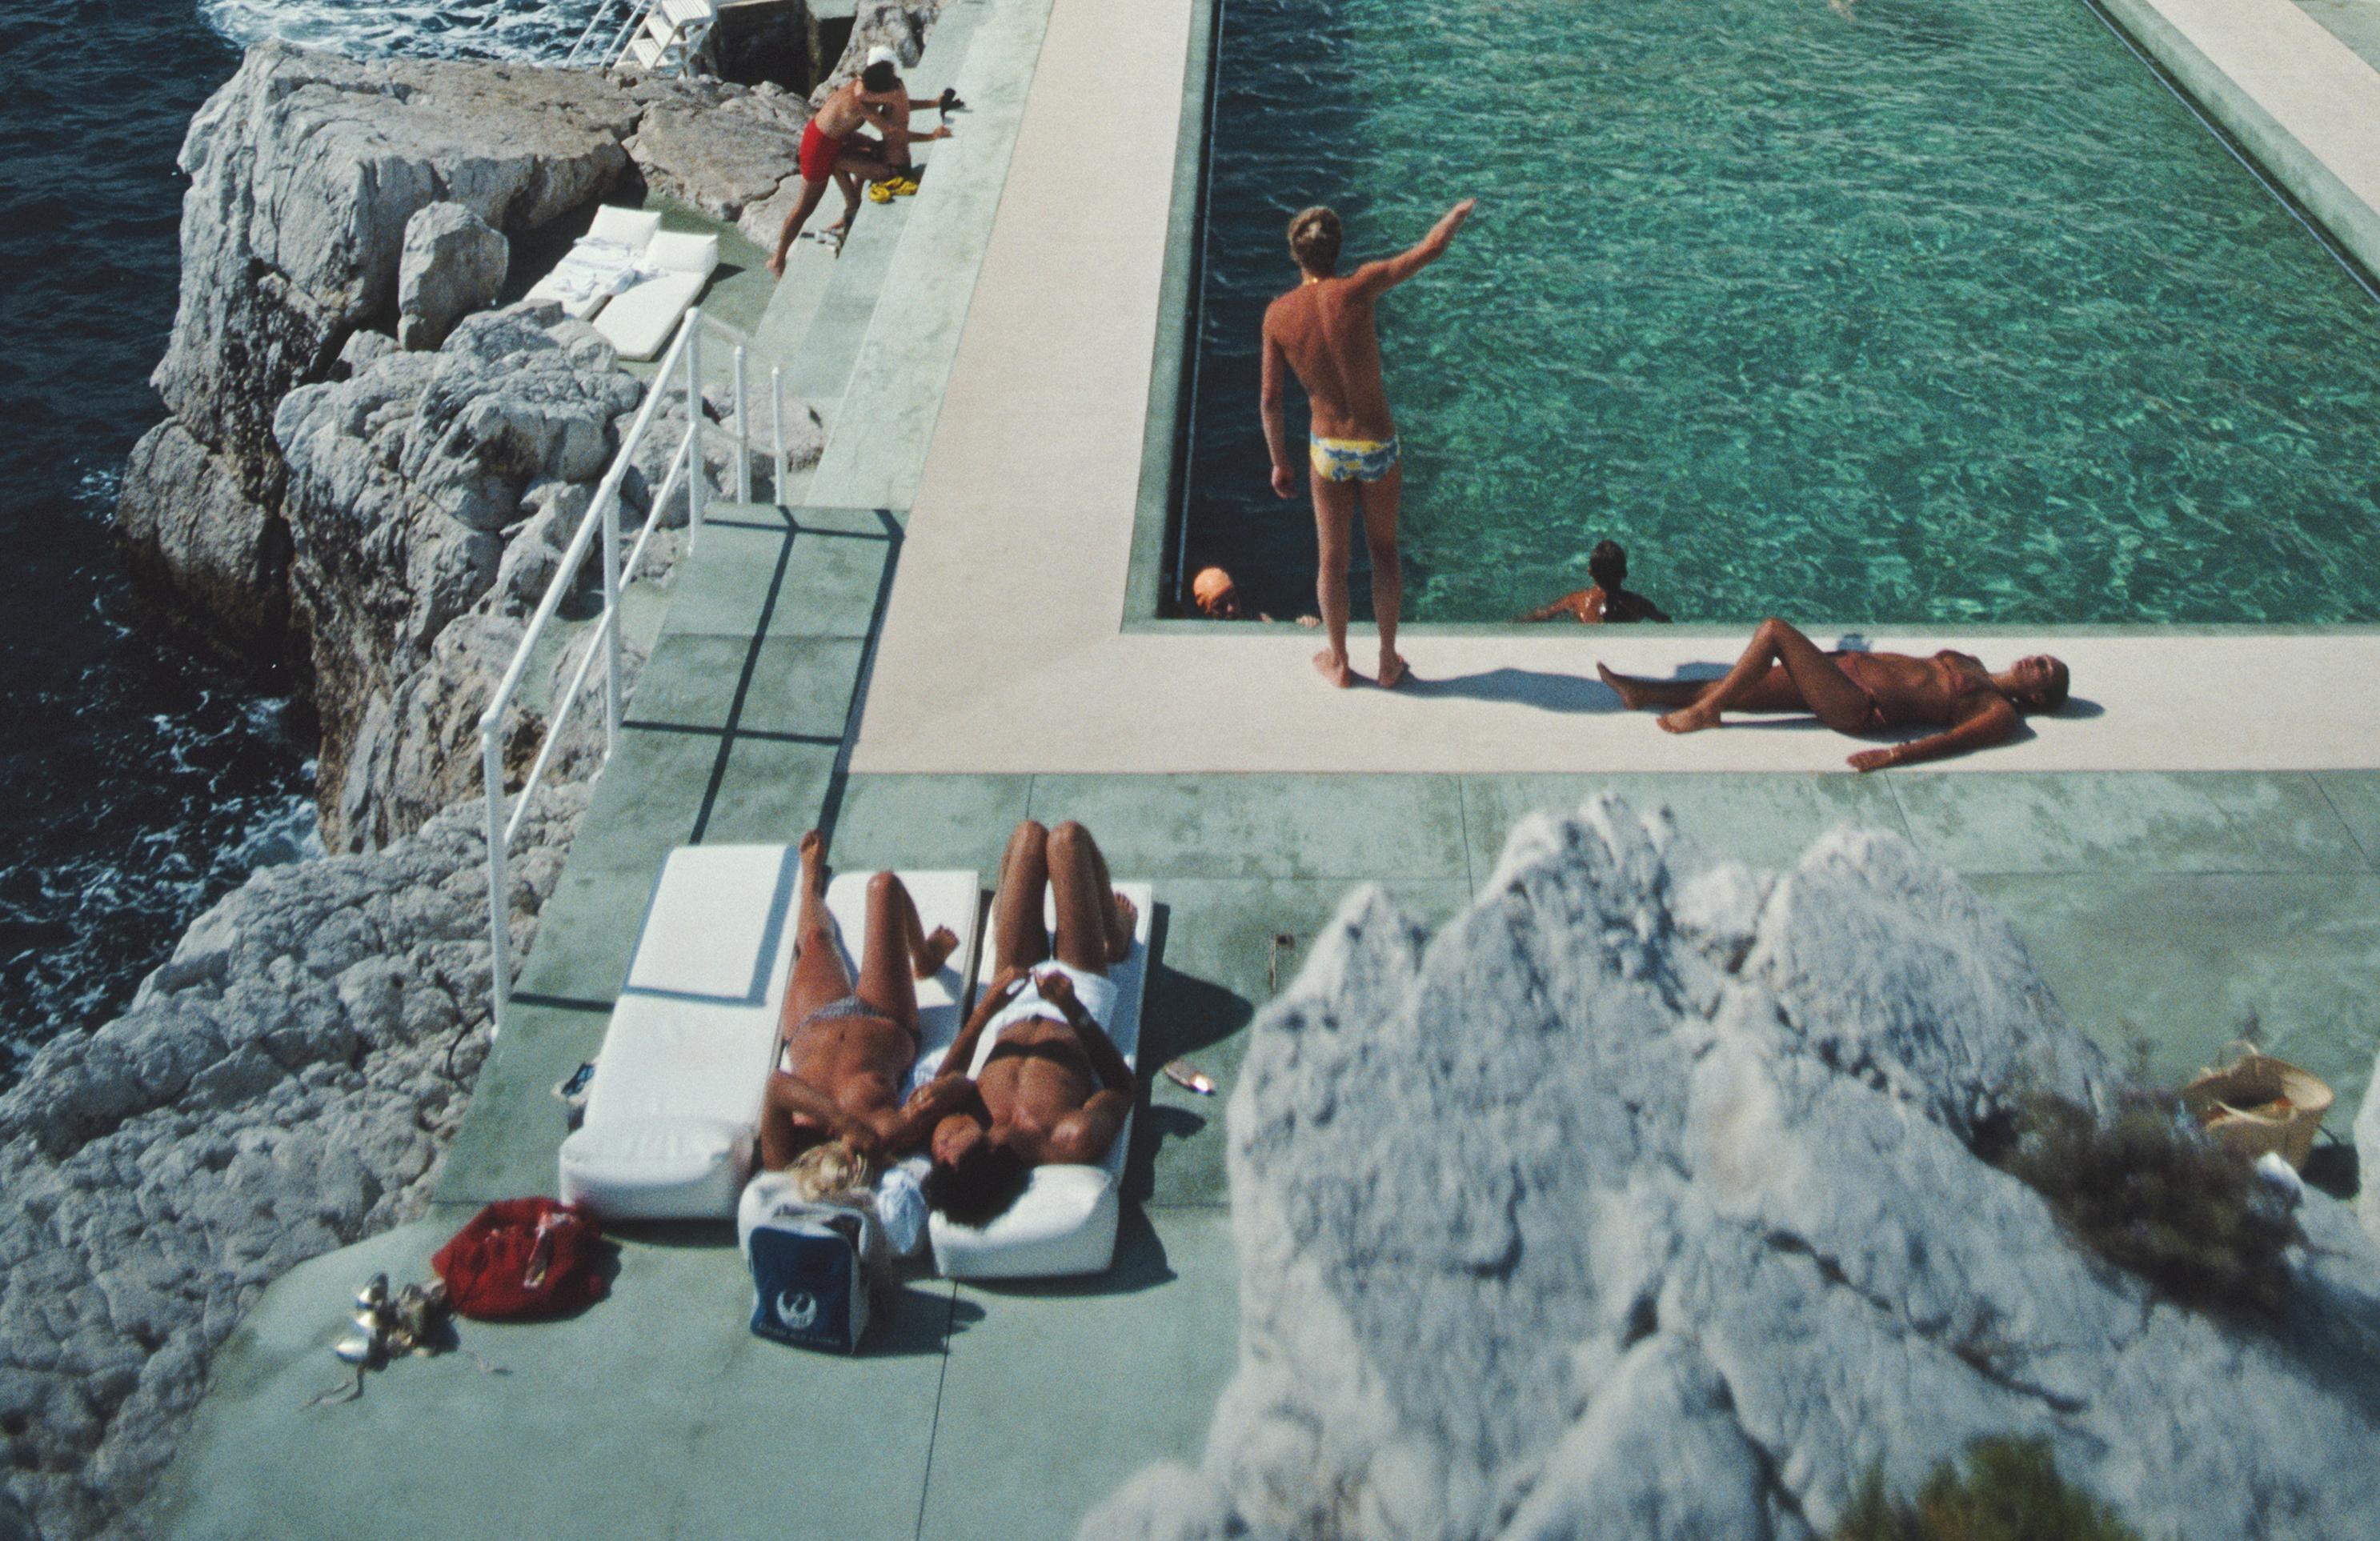 Hôtel du Cap Eden-Roc, Estate Edition, Poolside in Antibes, France - Photograph by Slim Aarons